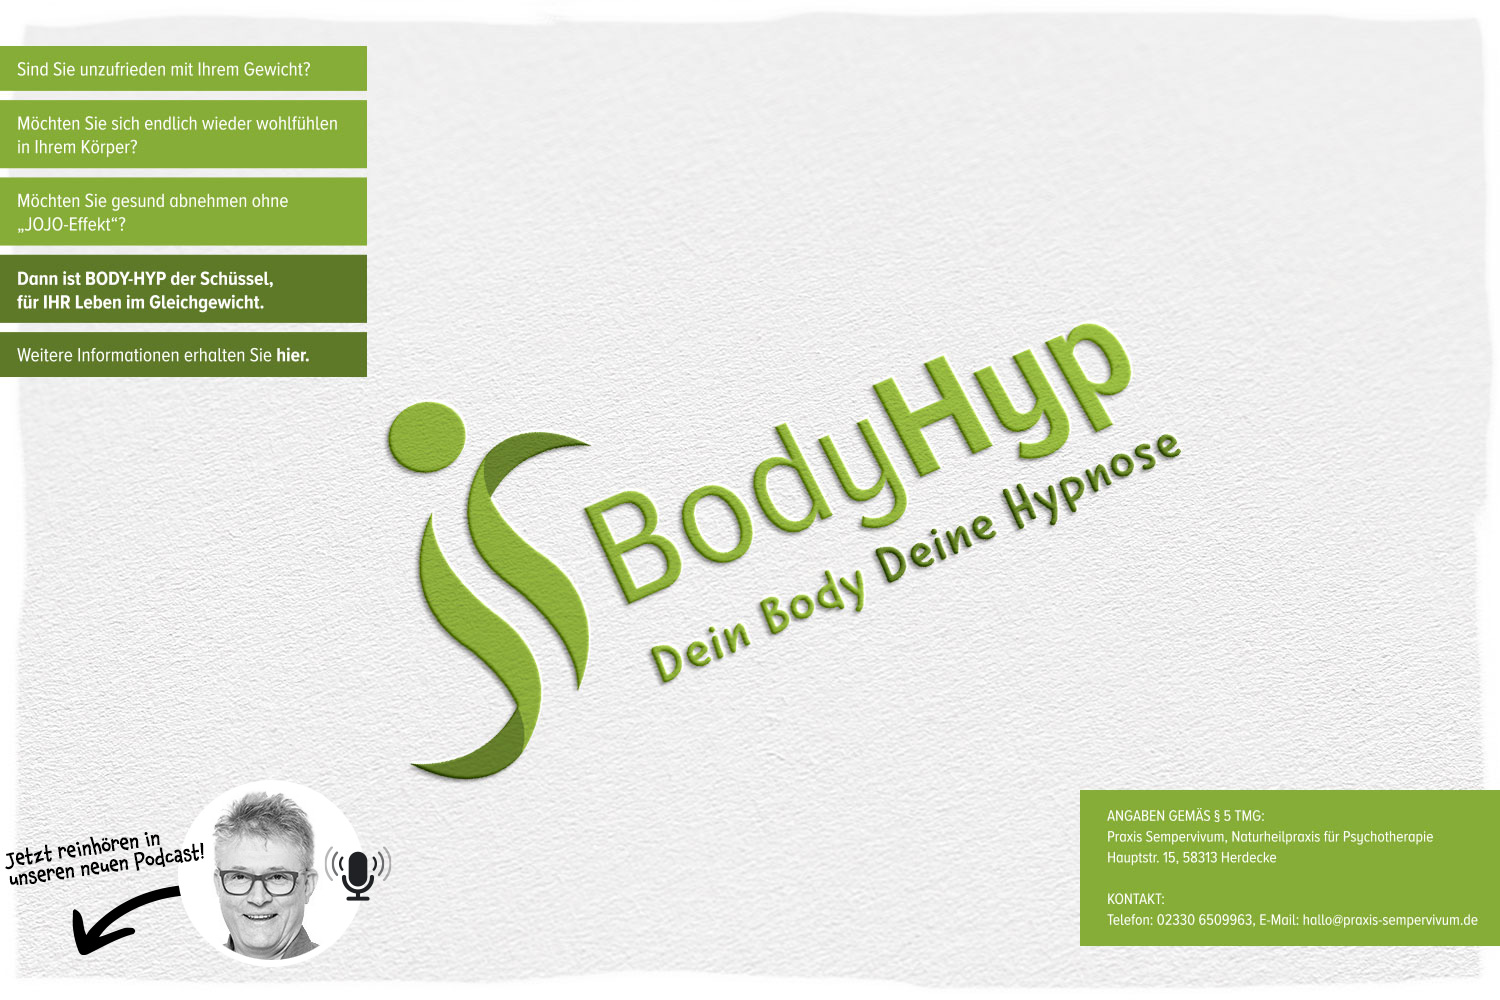 body-hyp.de